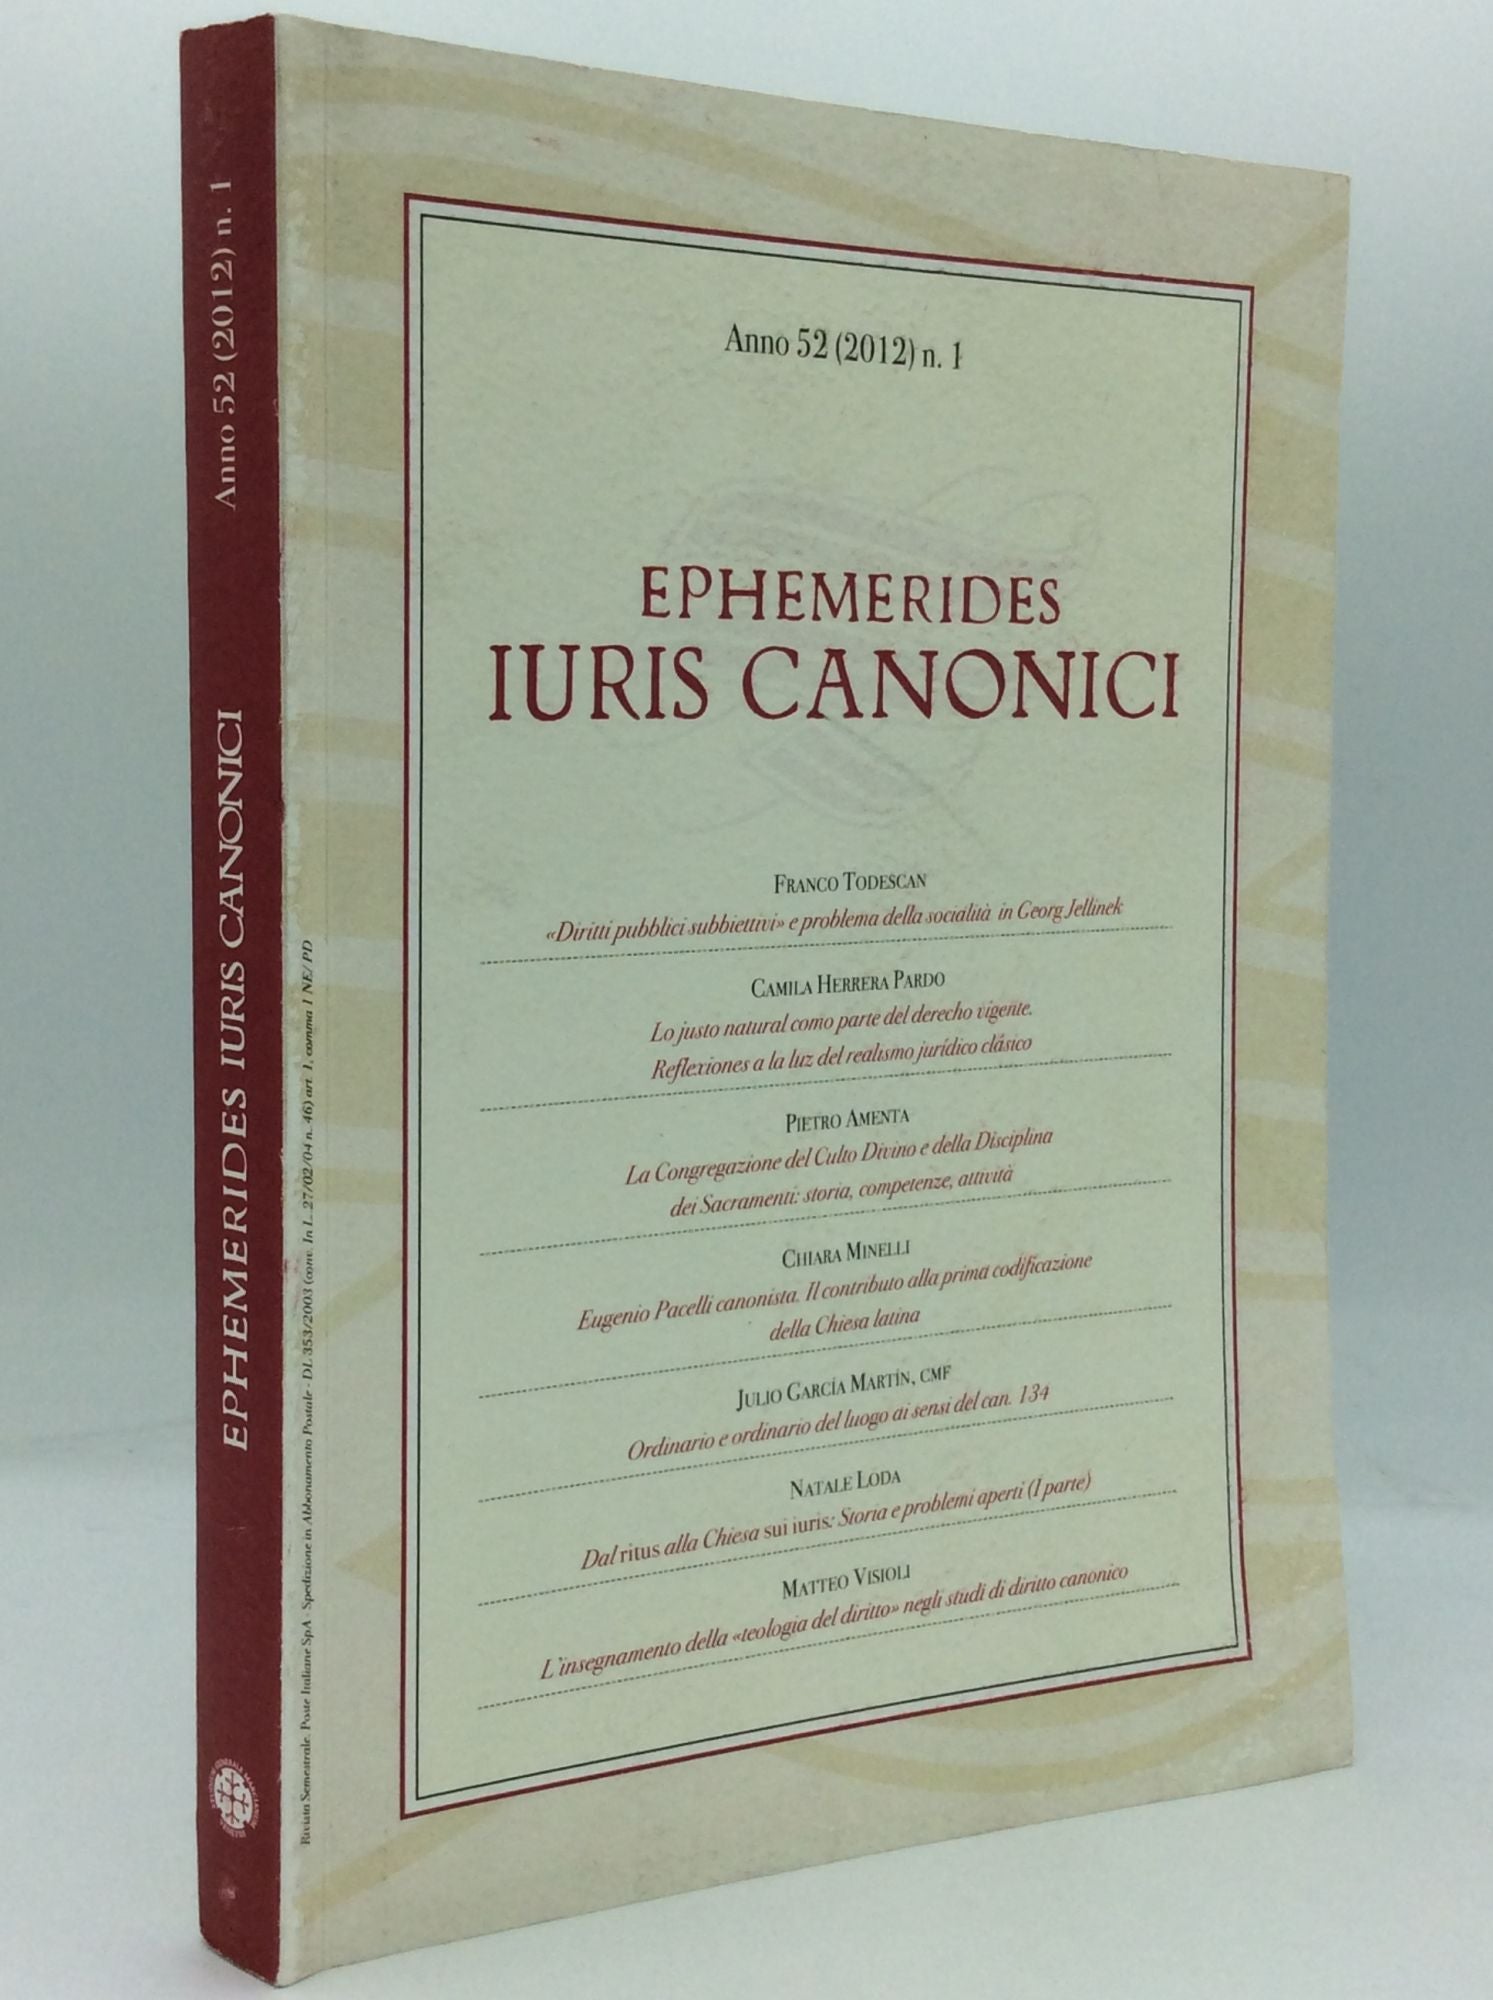  - Ephemerides Iuris Canonici: Nuova Serie, Anno 52, N. 1